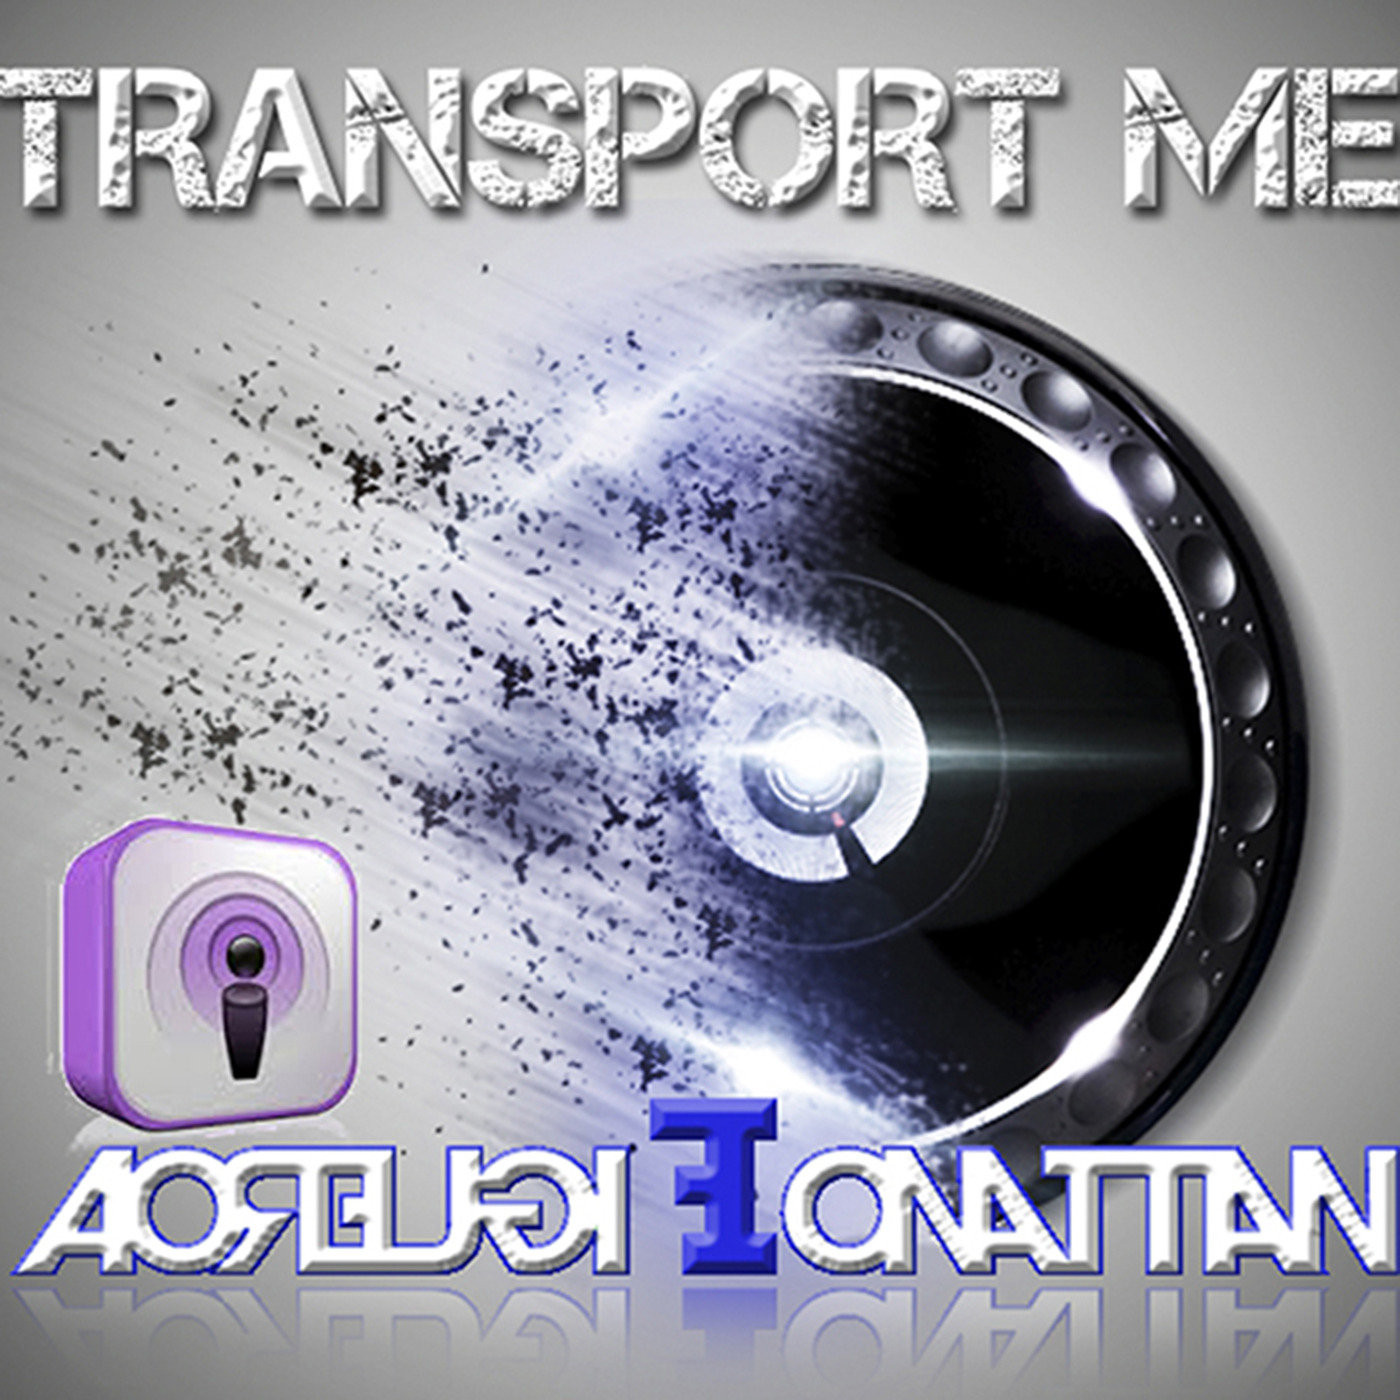 Podcast Transport me by Ionattan Figueroa